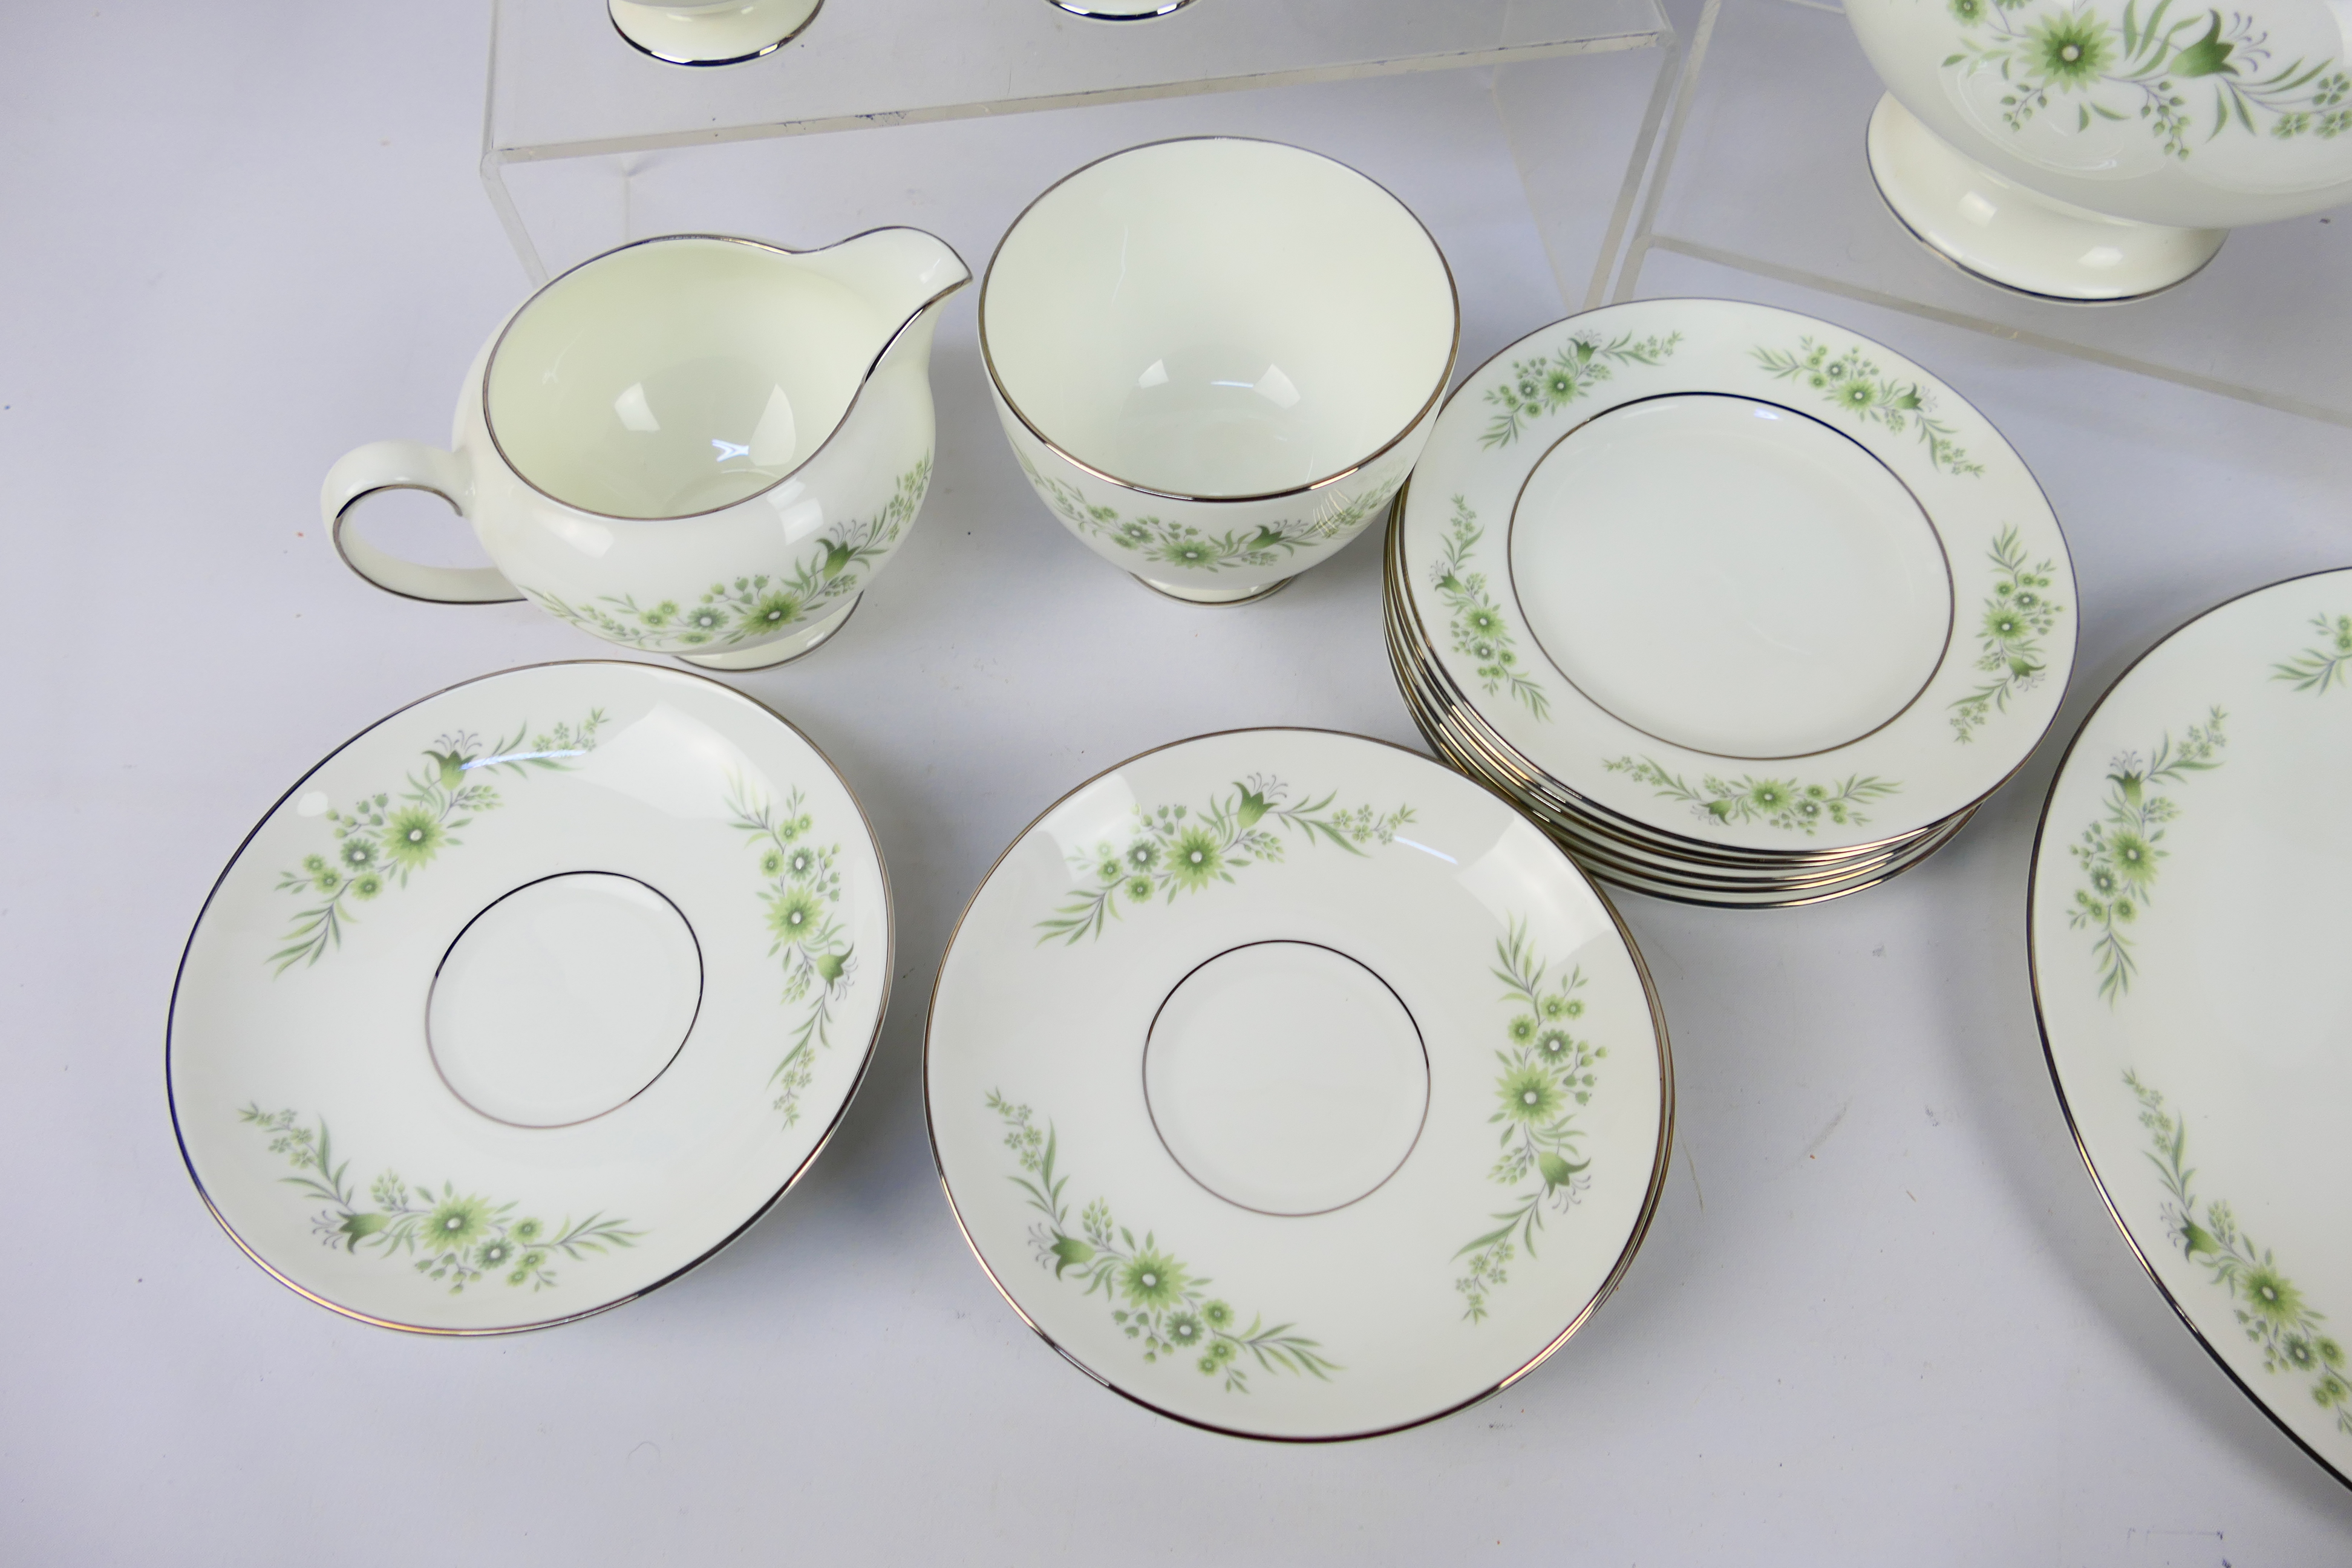 Wedgwood - A Wedgwood ceramic tea service set - Set has floral patterns. - Image 2 of 4